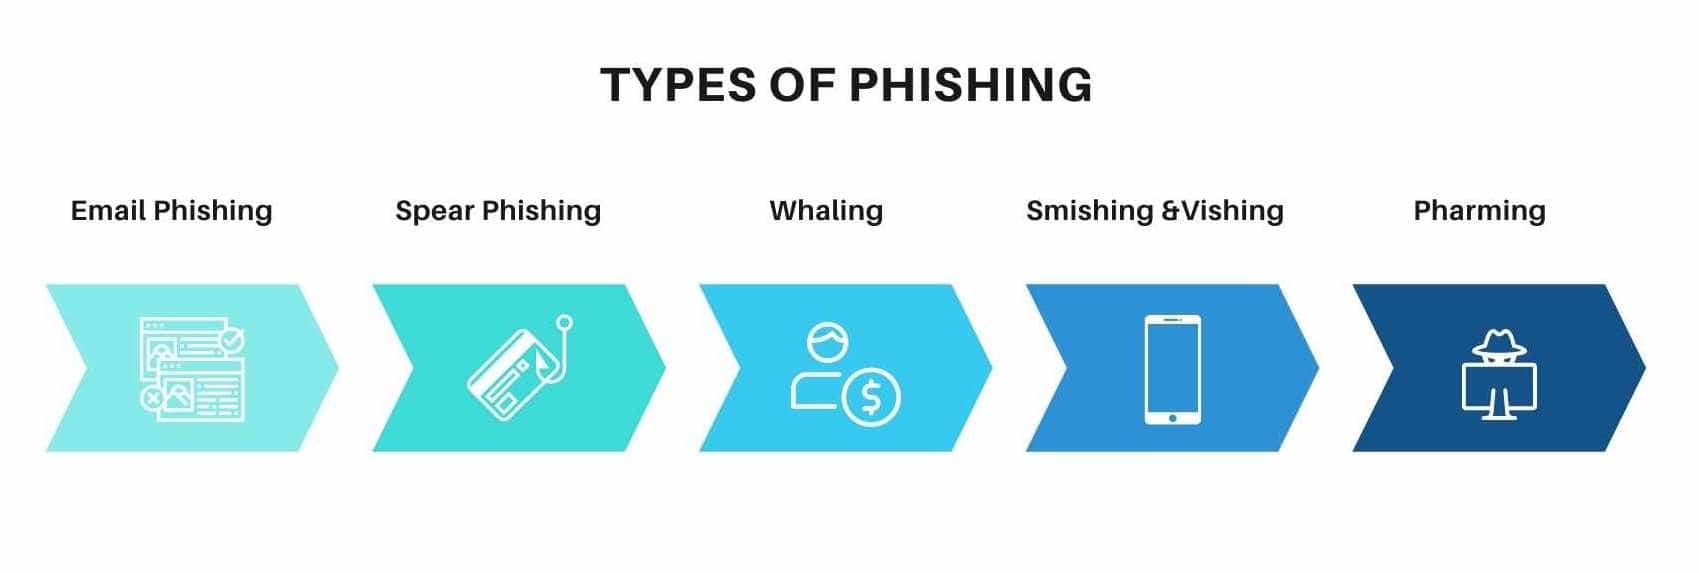 Types of phishing